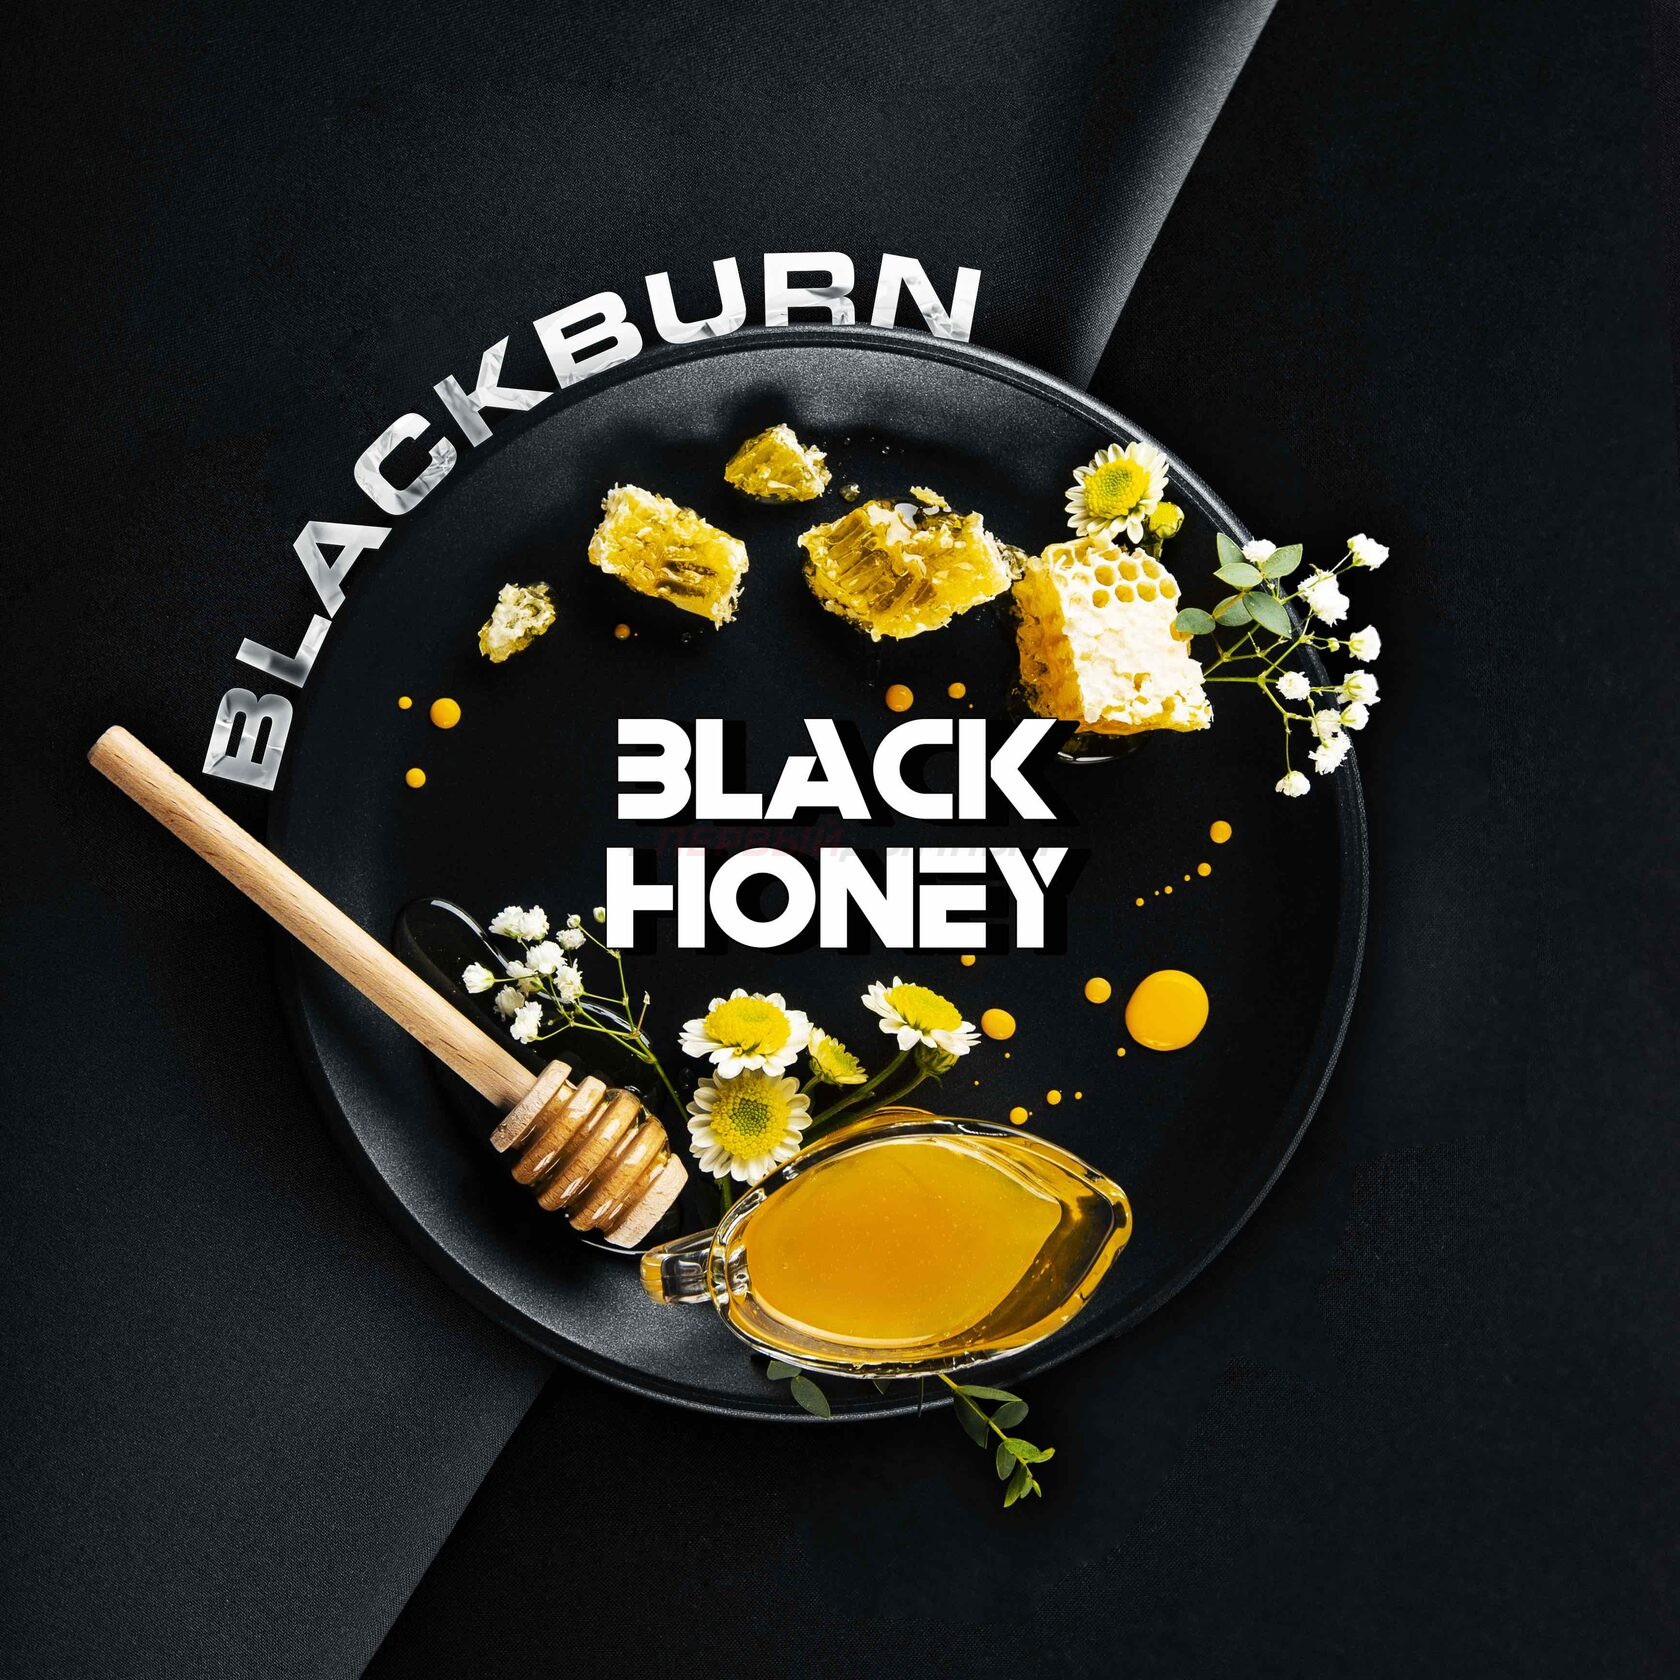 (МТ) BlackBurn 25гр Black Honey - Цветочный мед